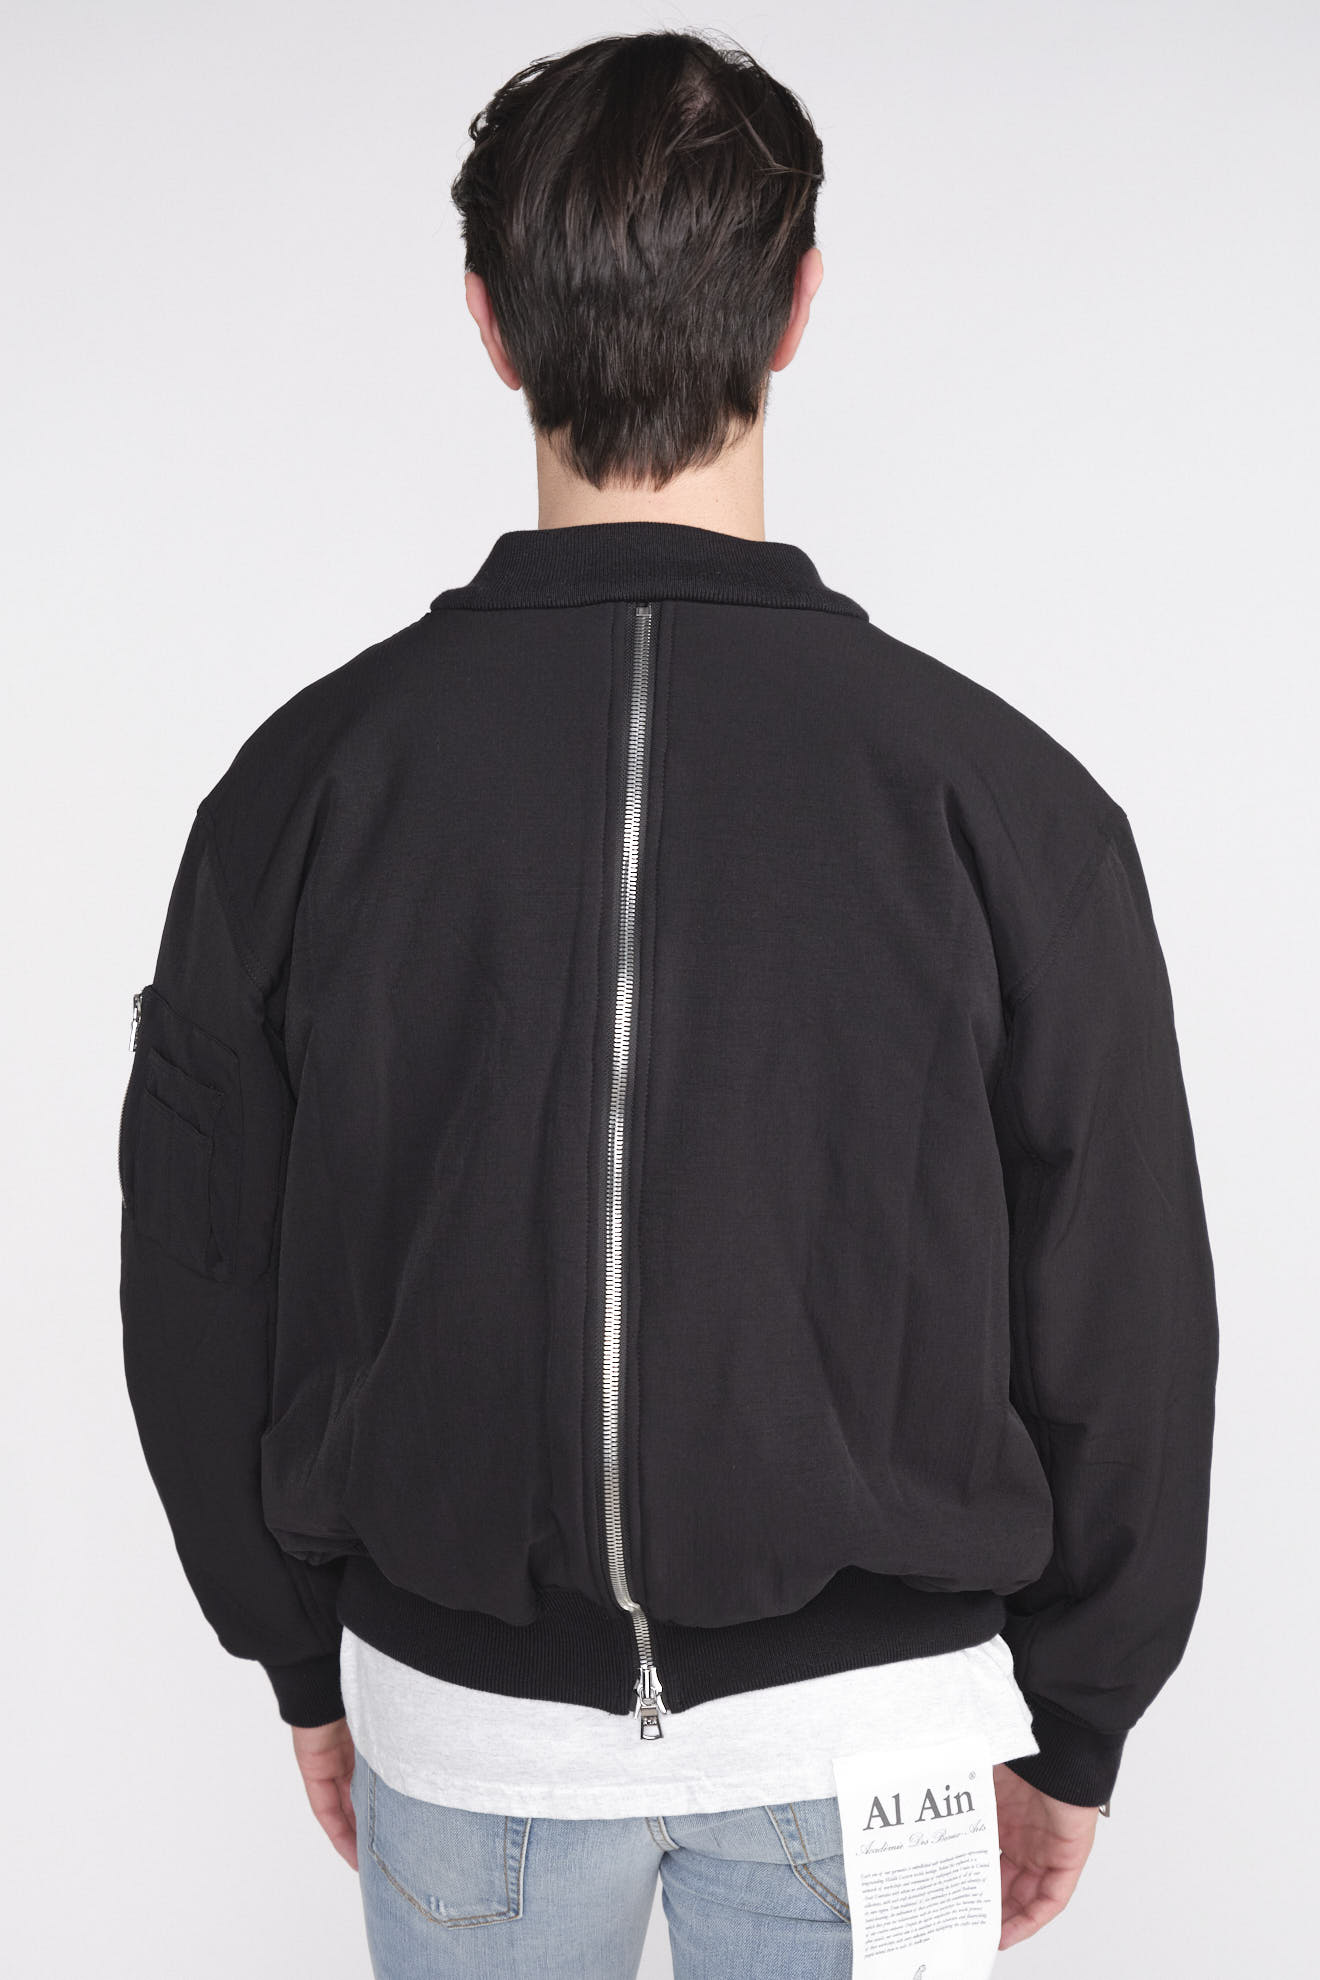 RtA Zipper Bomber Jacket - Bomber style jacket with zipper details black M